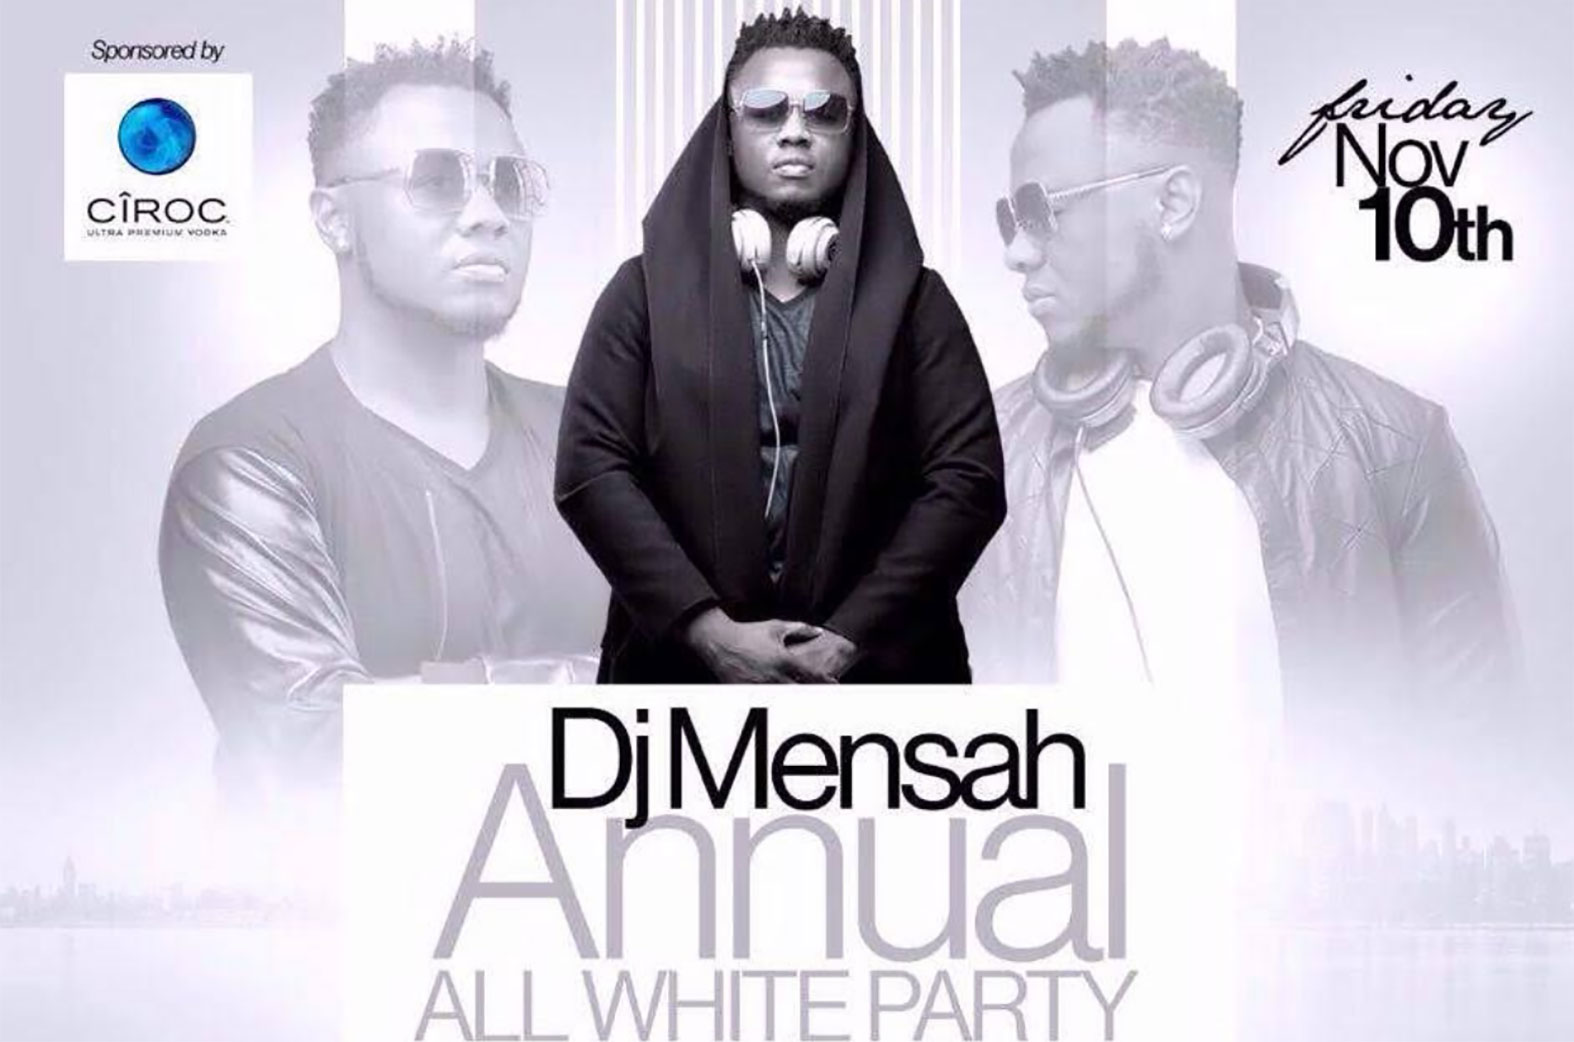 AJ Mensah Annual All White party